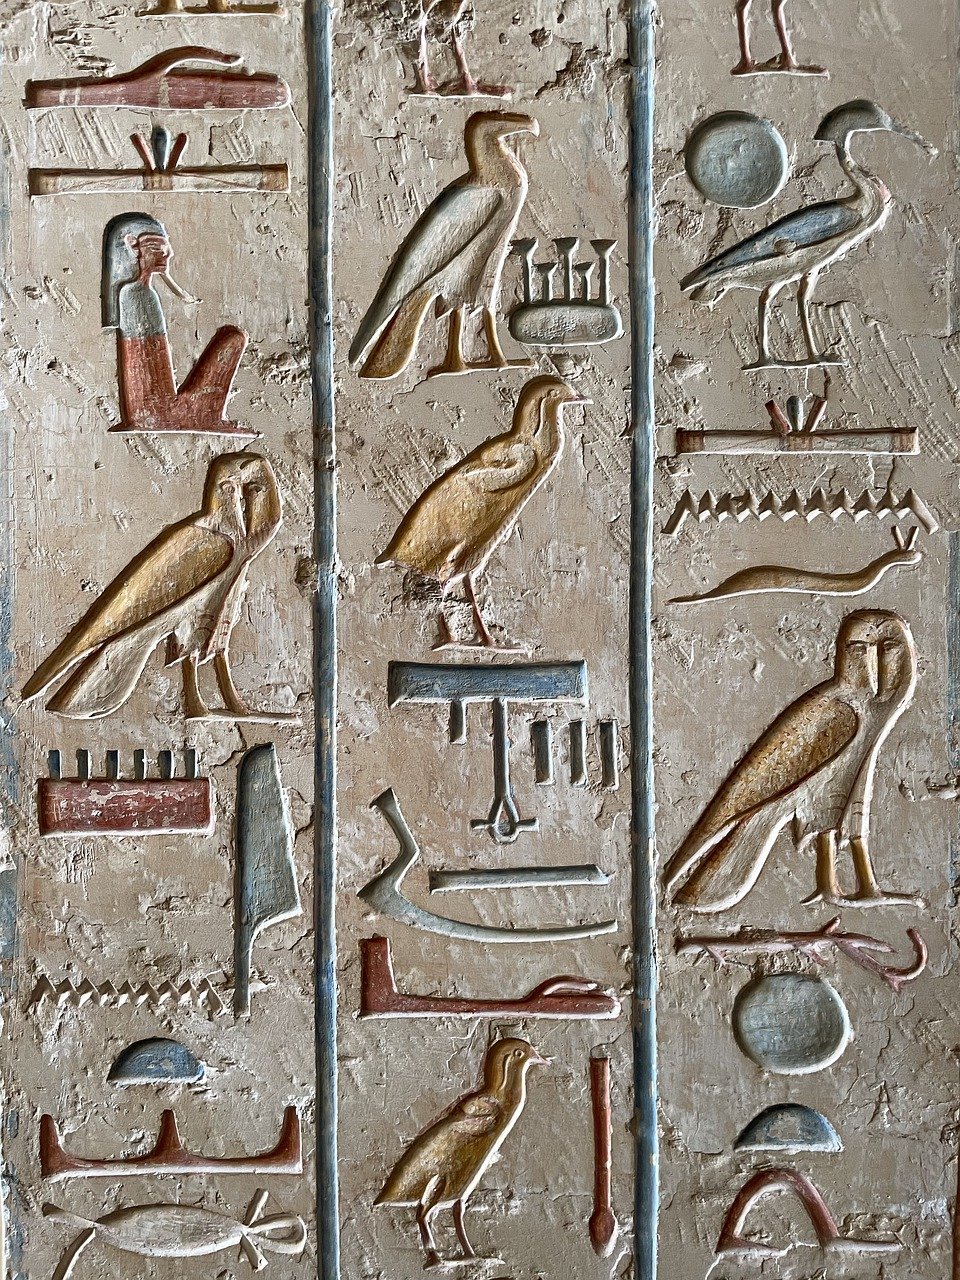 7 Days of Egyptian Wonders